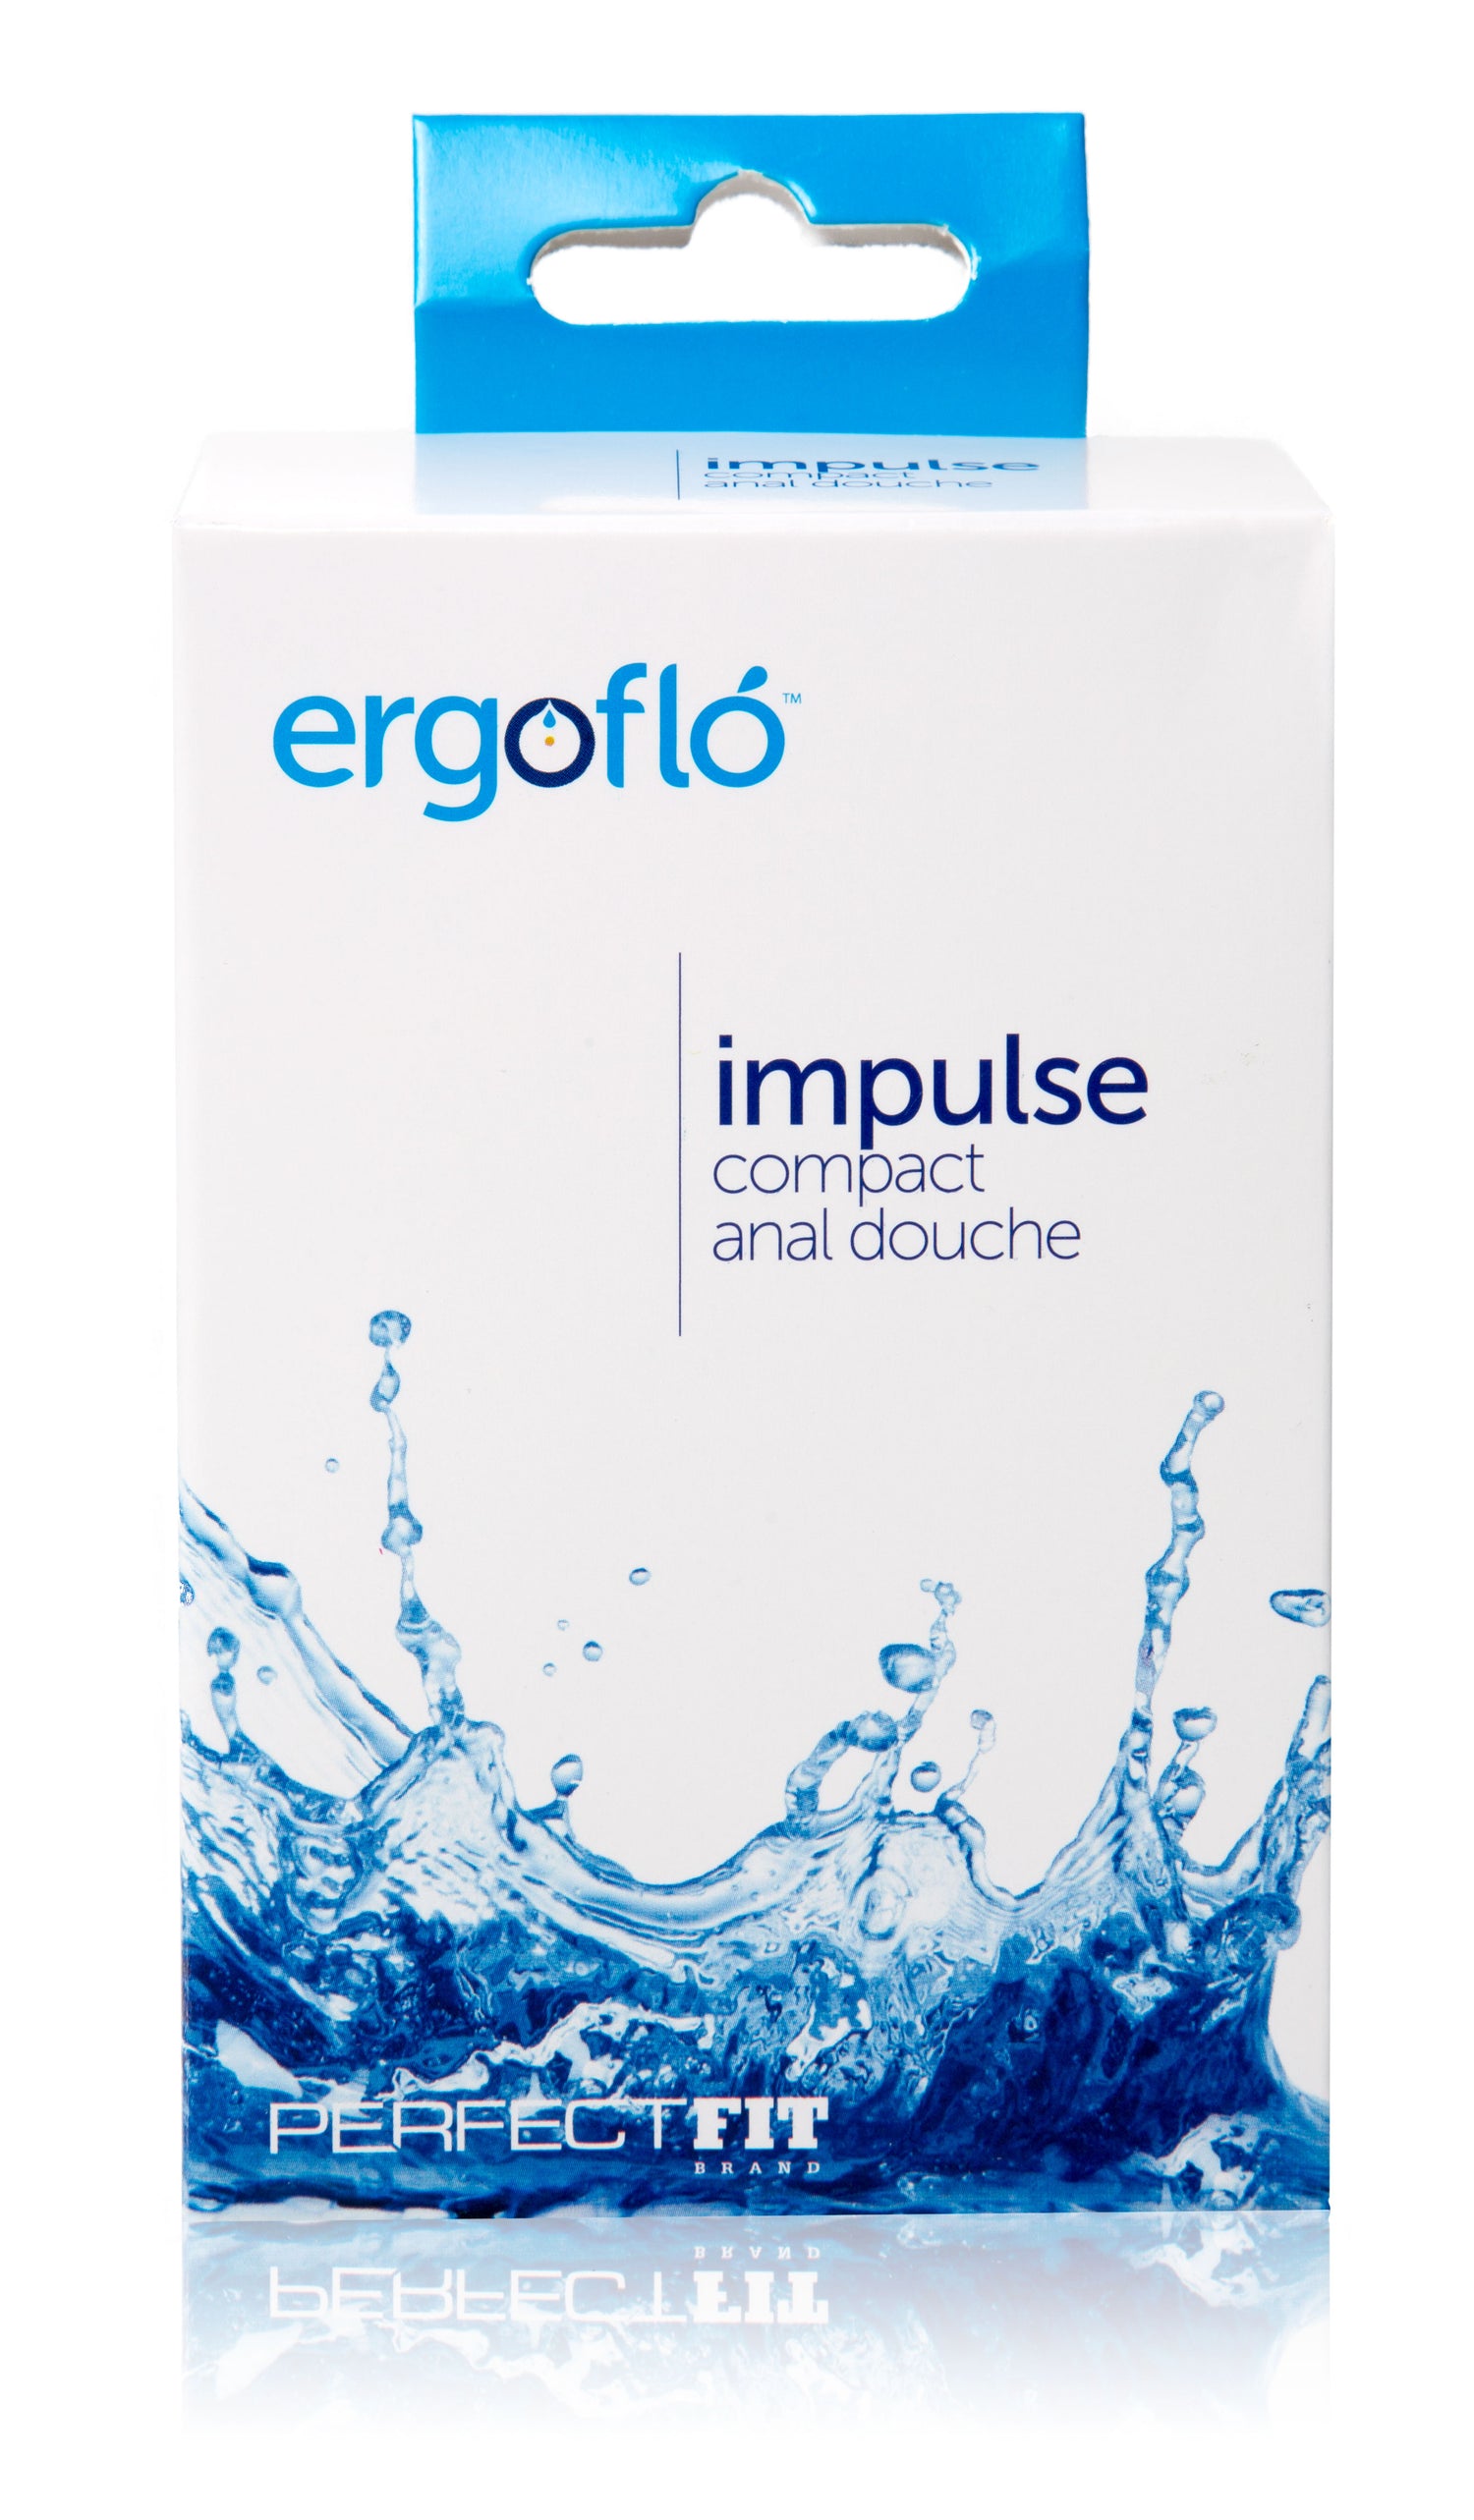 Ergoflo Impulse - Just for you desires